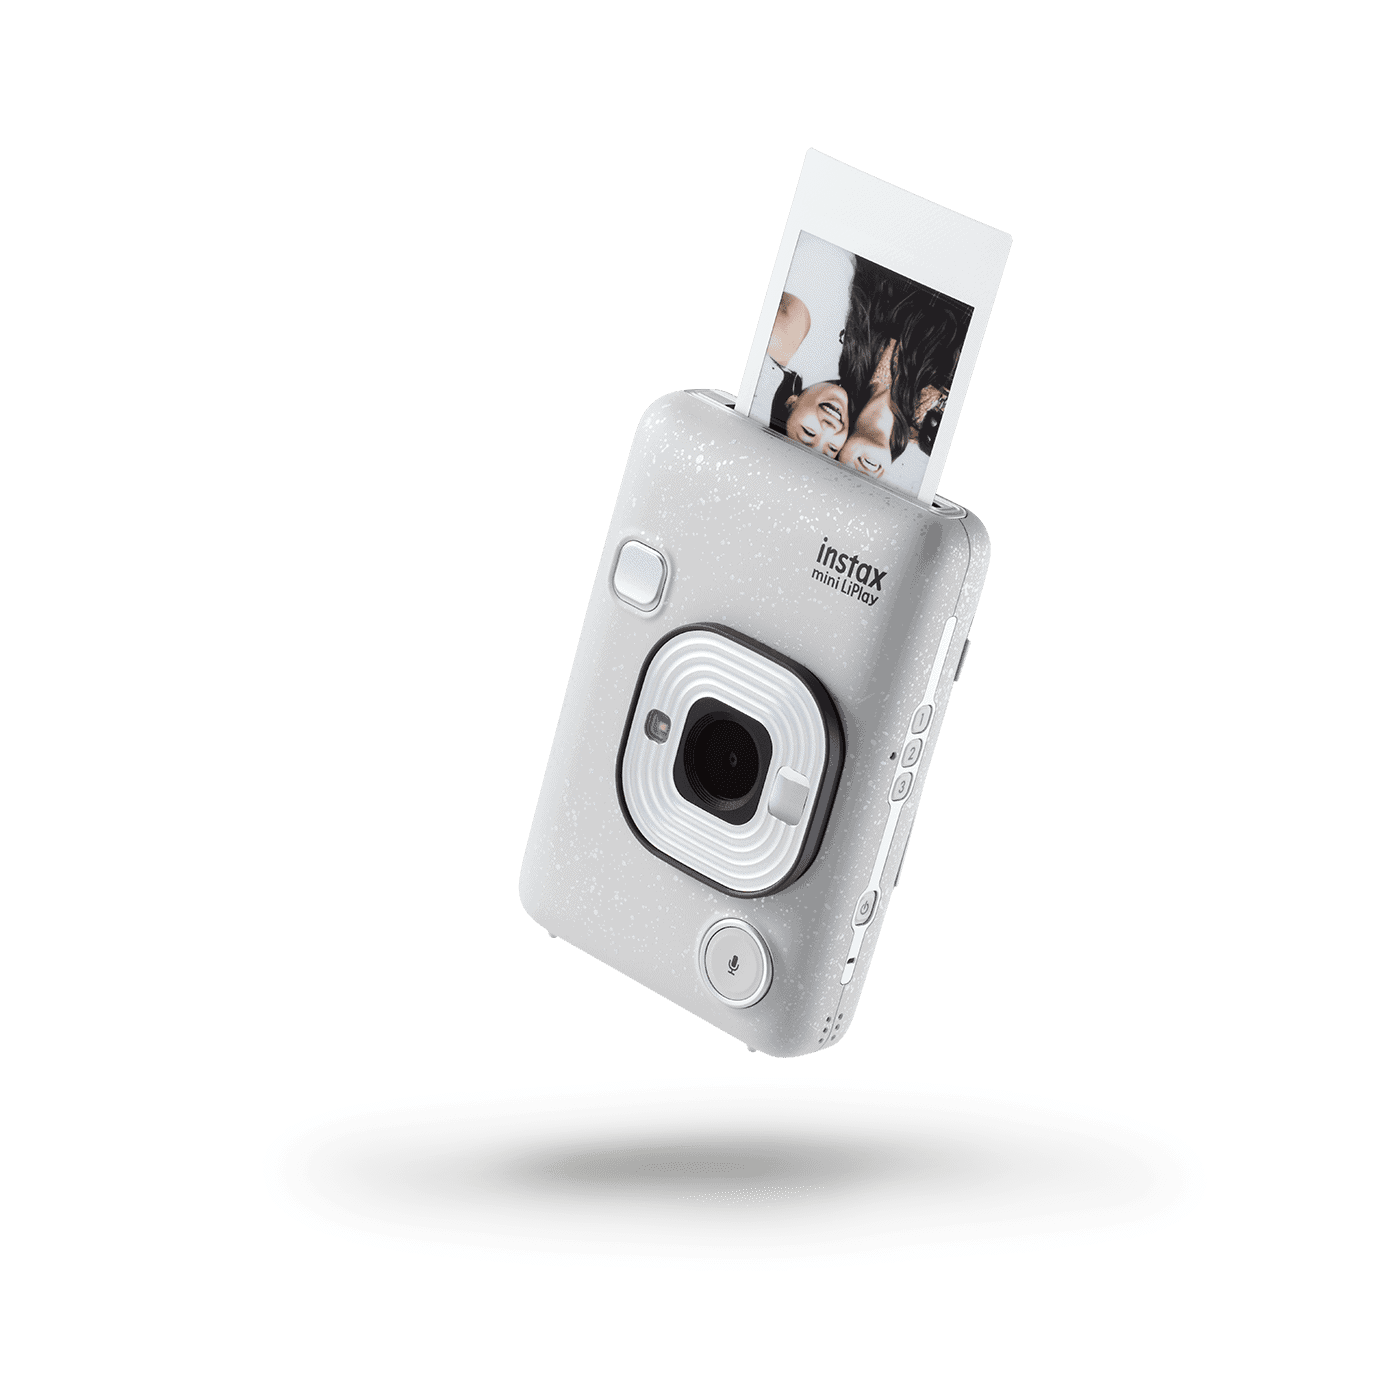 Regeren Montgomery Monteur Mini LiPlay Digital Camera by instax | Instant Digital Camera